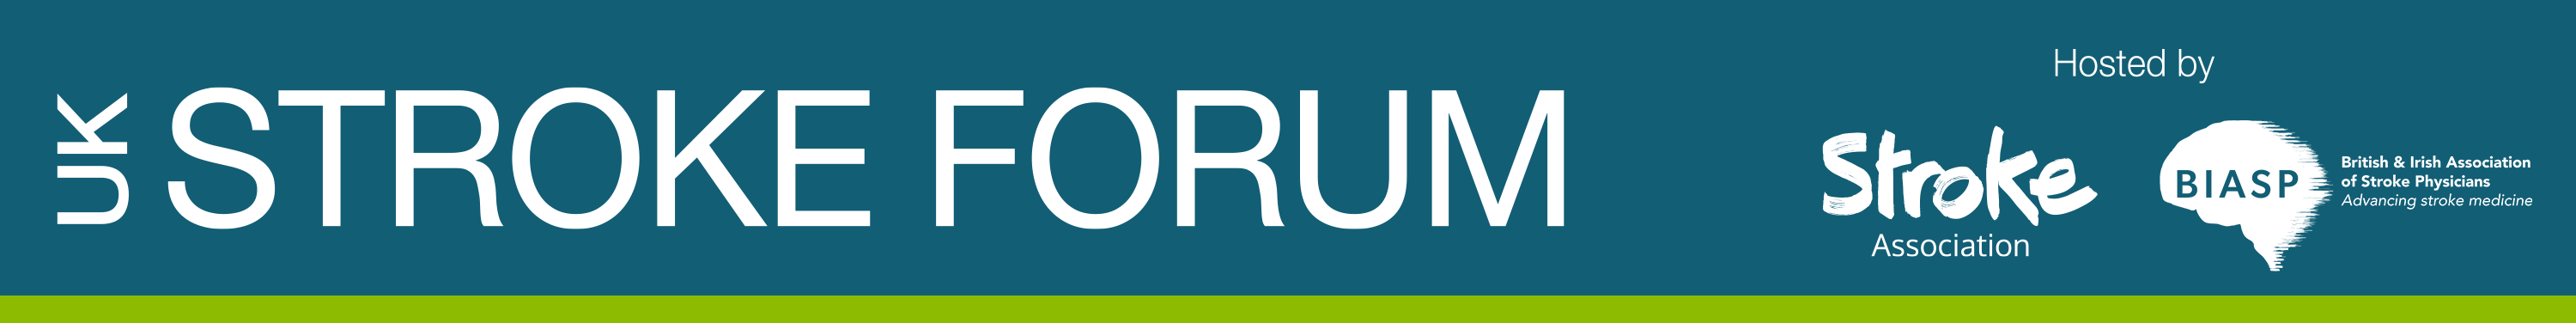 UK Stroke Forum. 29 November - 1 December 2022.